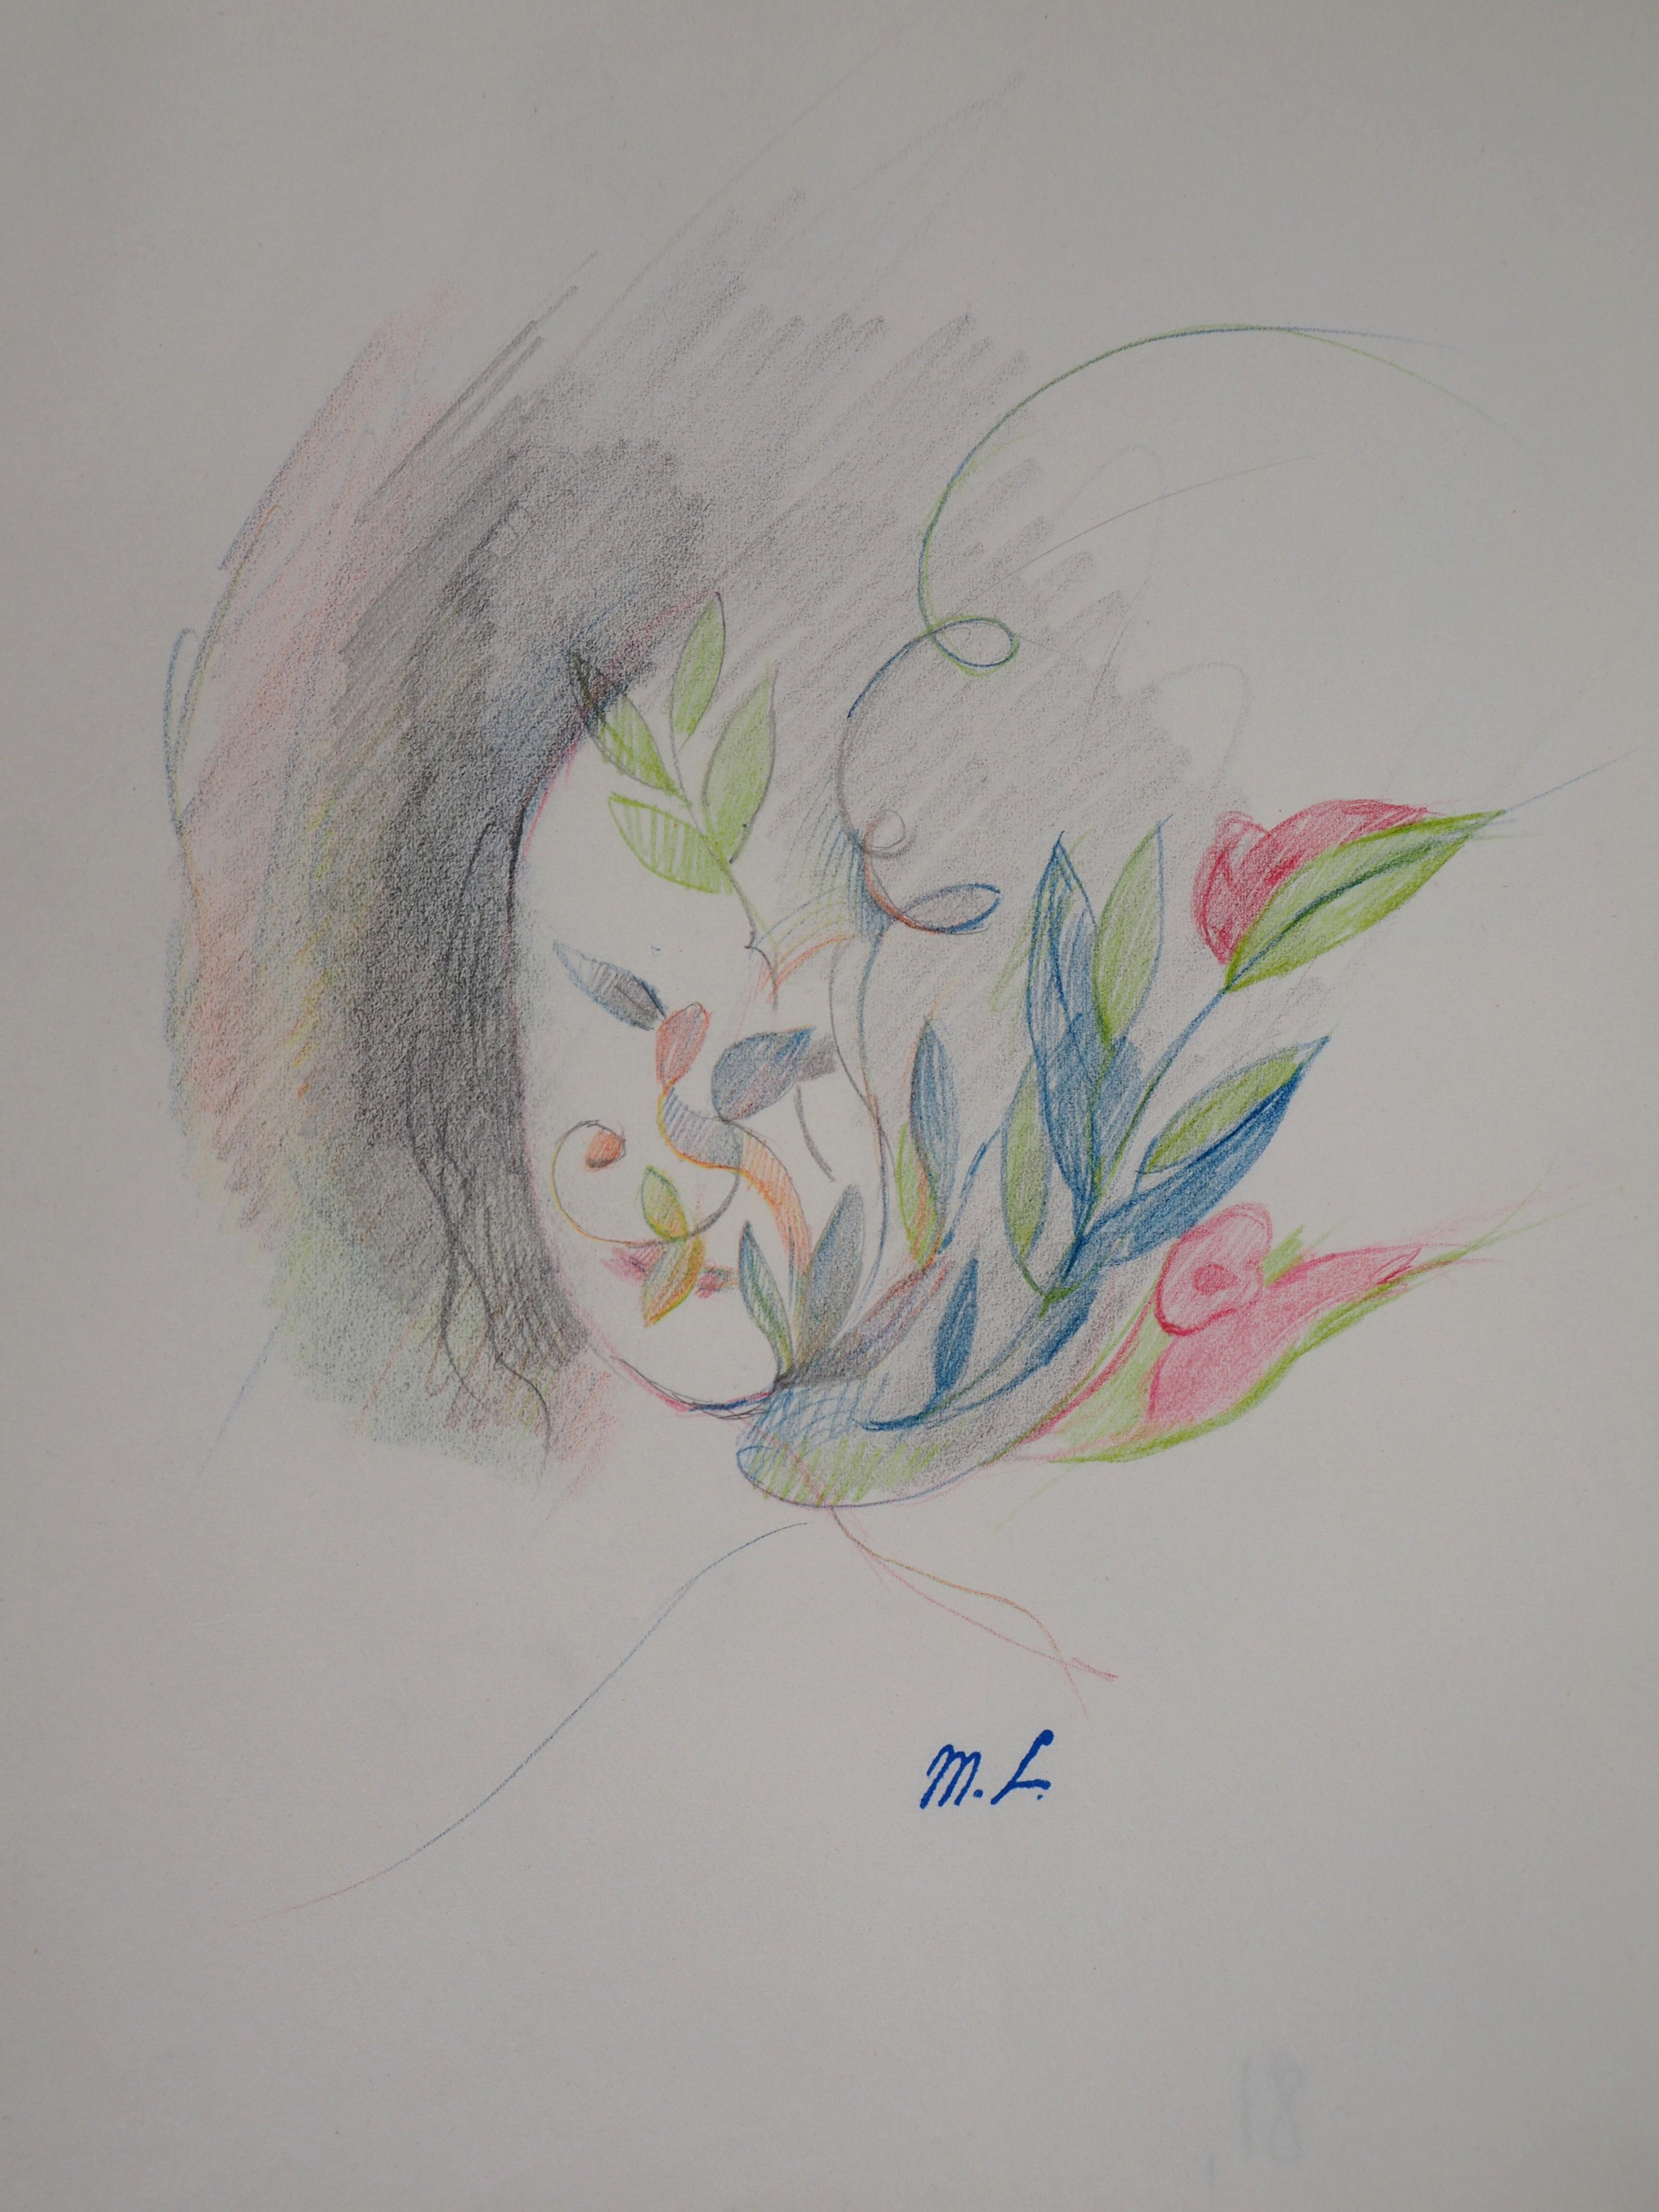 saraswati images pencil sketch